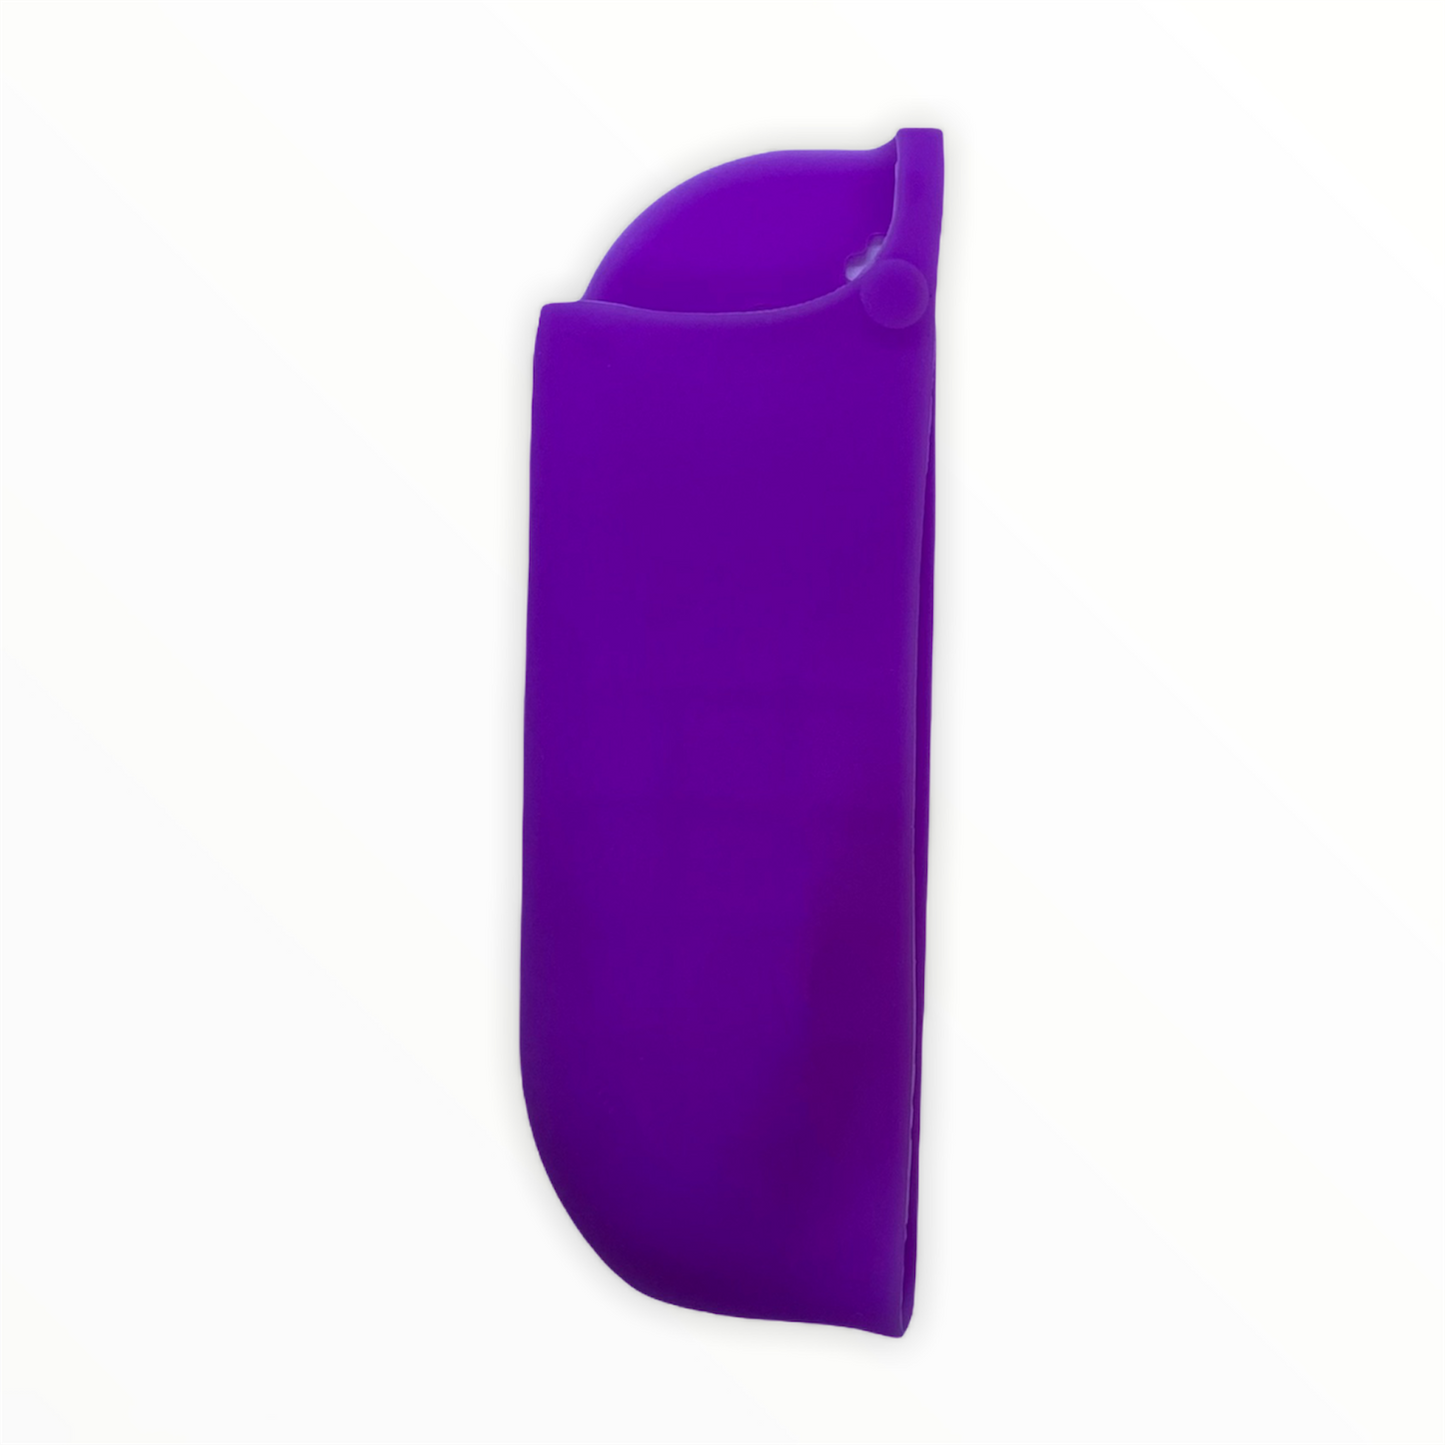 JenDore Purple & Lilac Silicone Nintendo Switch Joy-con Protective Shell Covers